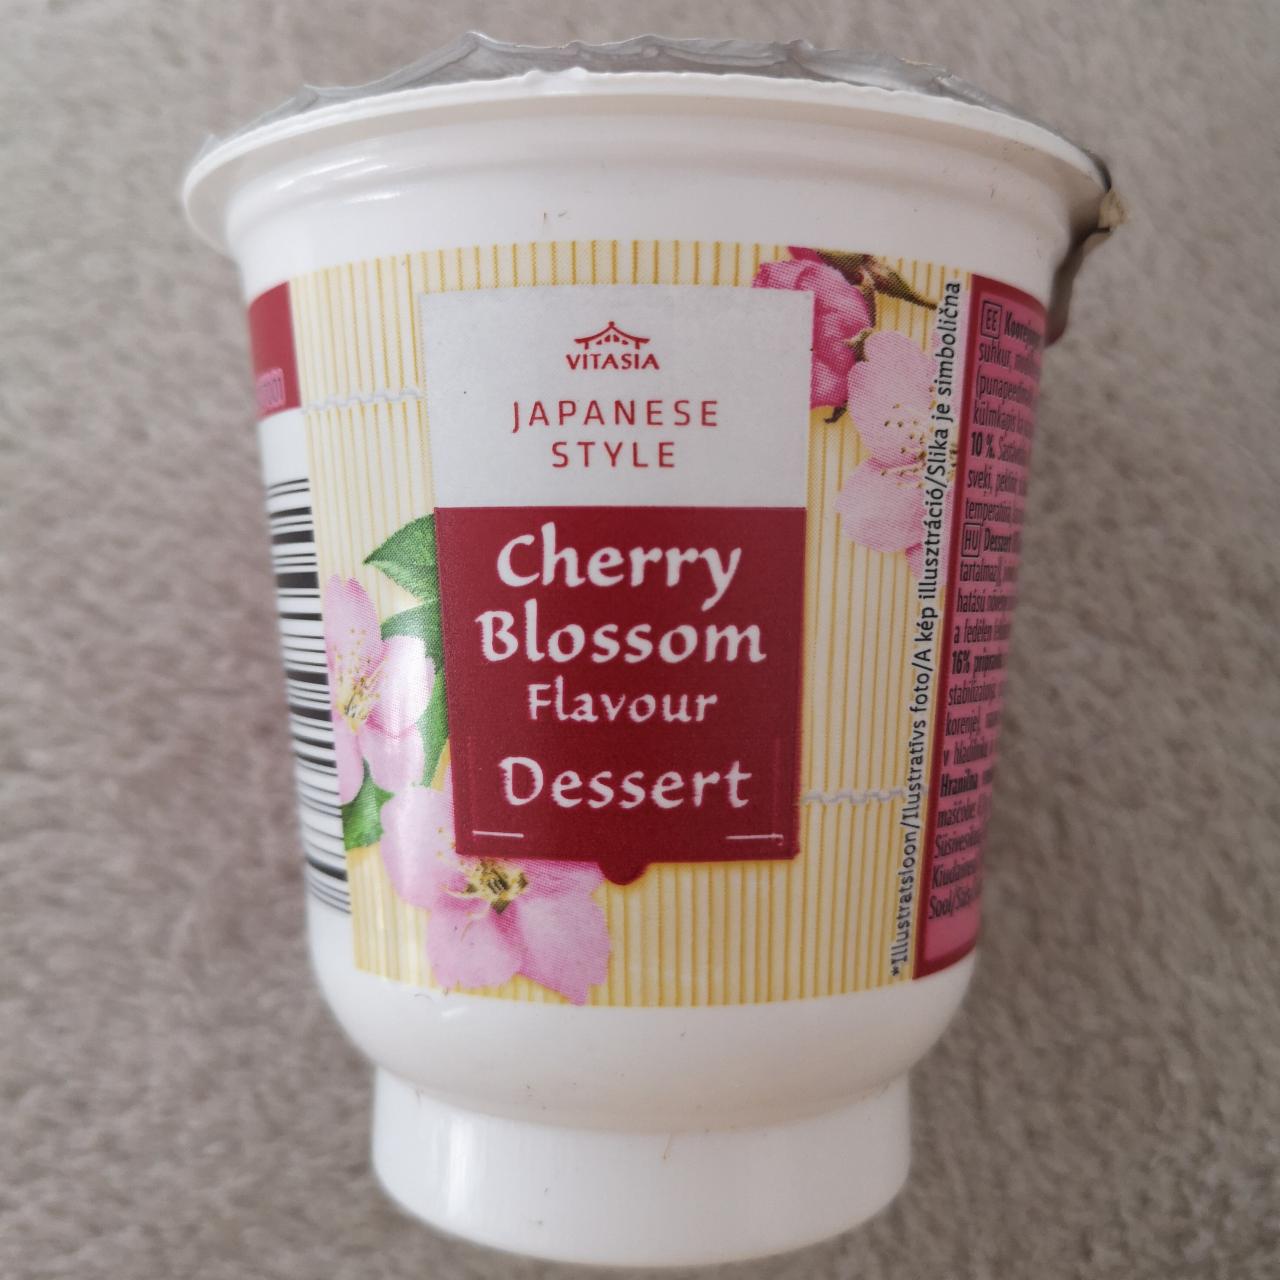 Képek - Japanese style Cherry Blossom flavour dessert Vitasia